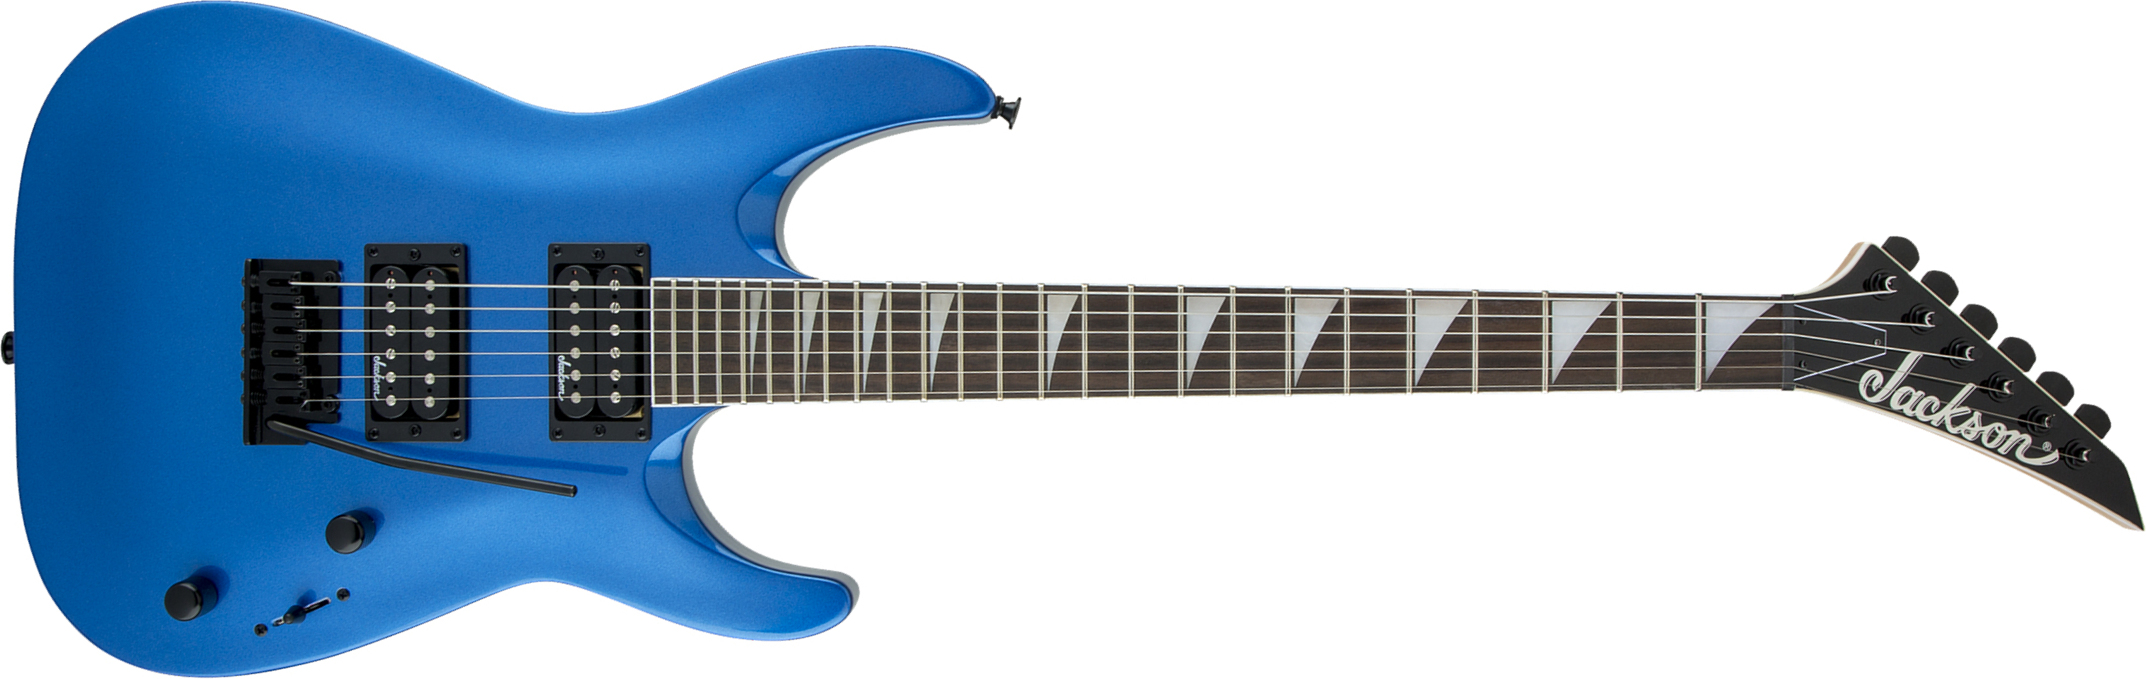 Jackson Dinky Arch Top Dka Js22 2h Trem Ama - Metallic Blue - Guitarra electrica metalica - Main picture